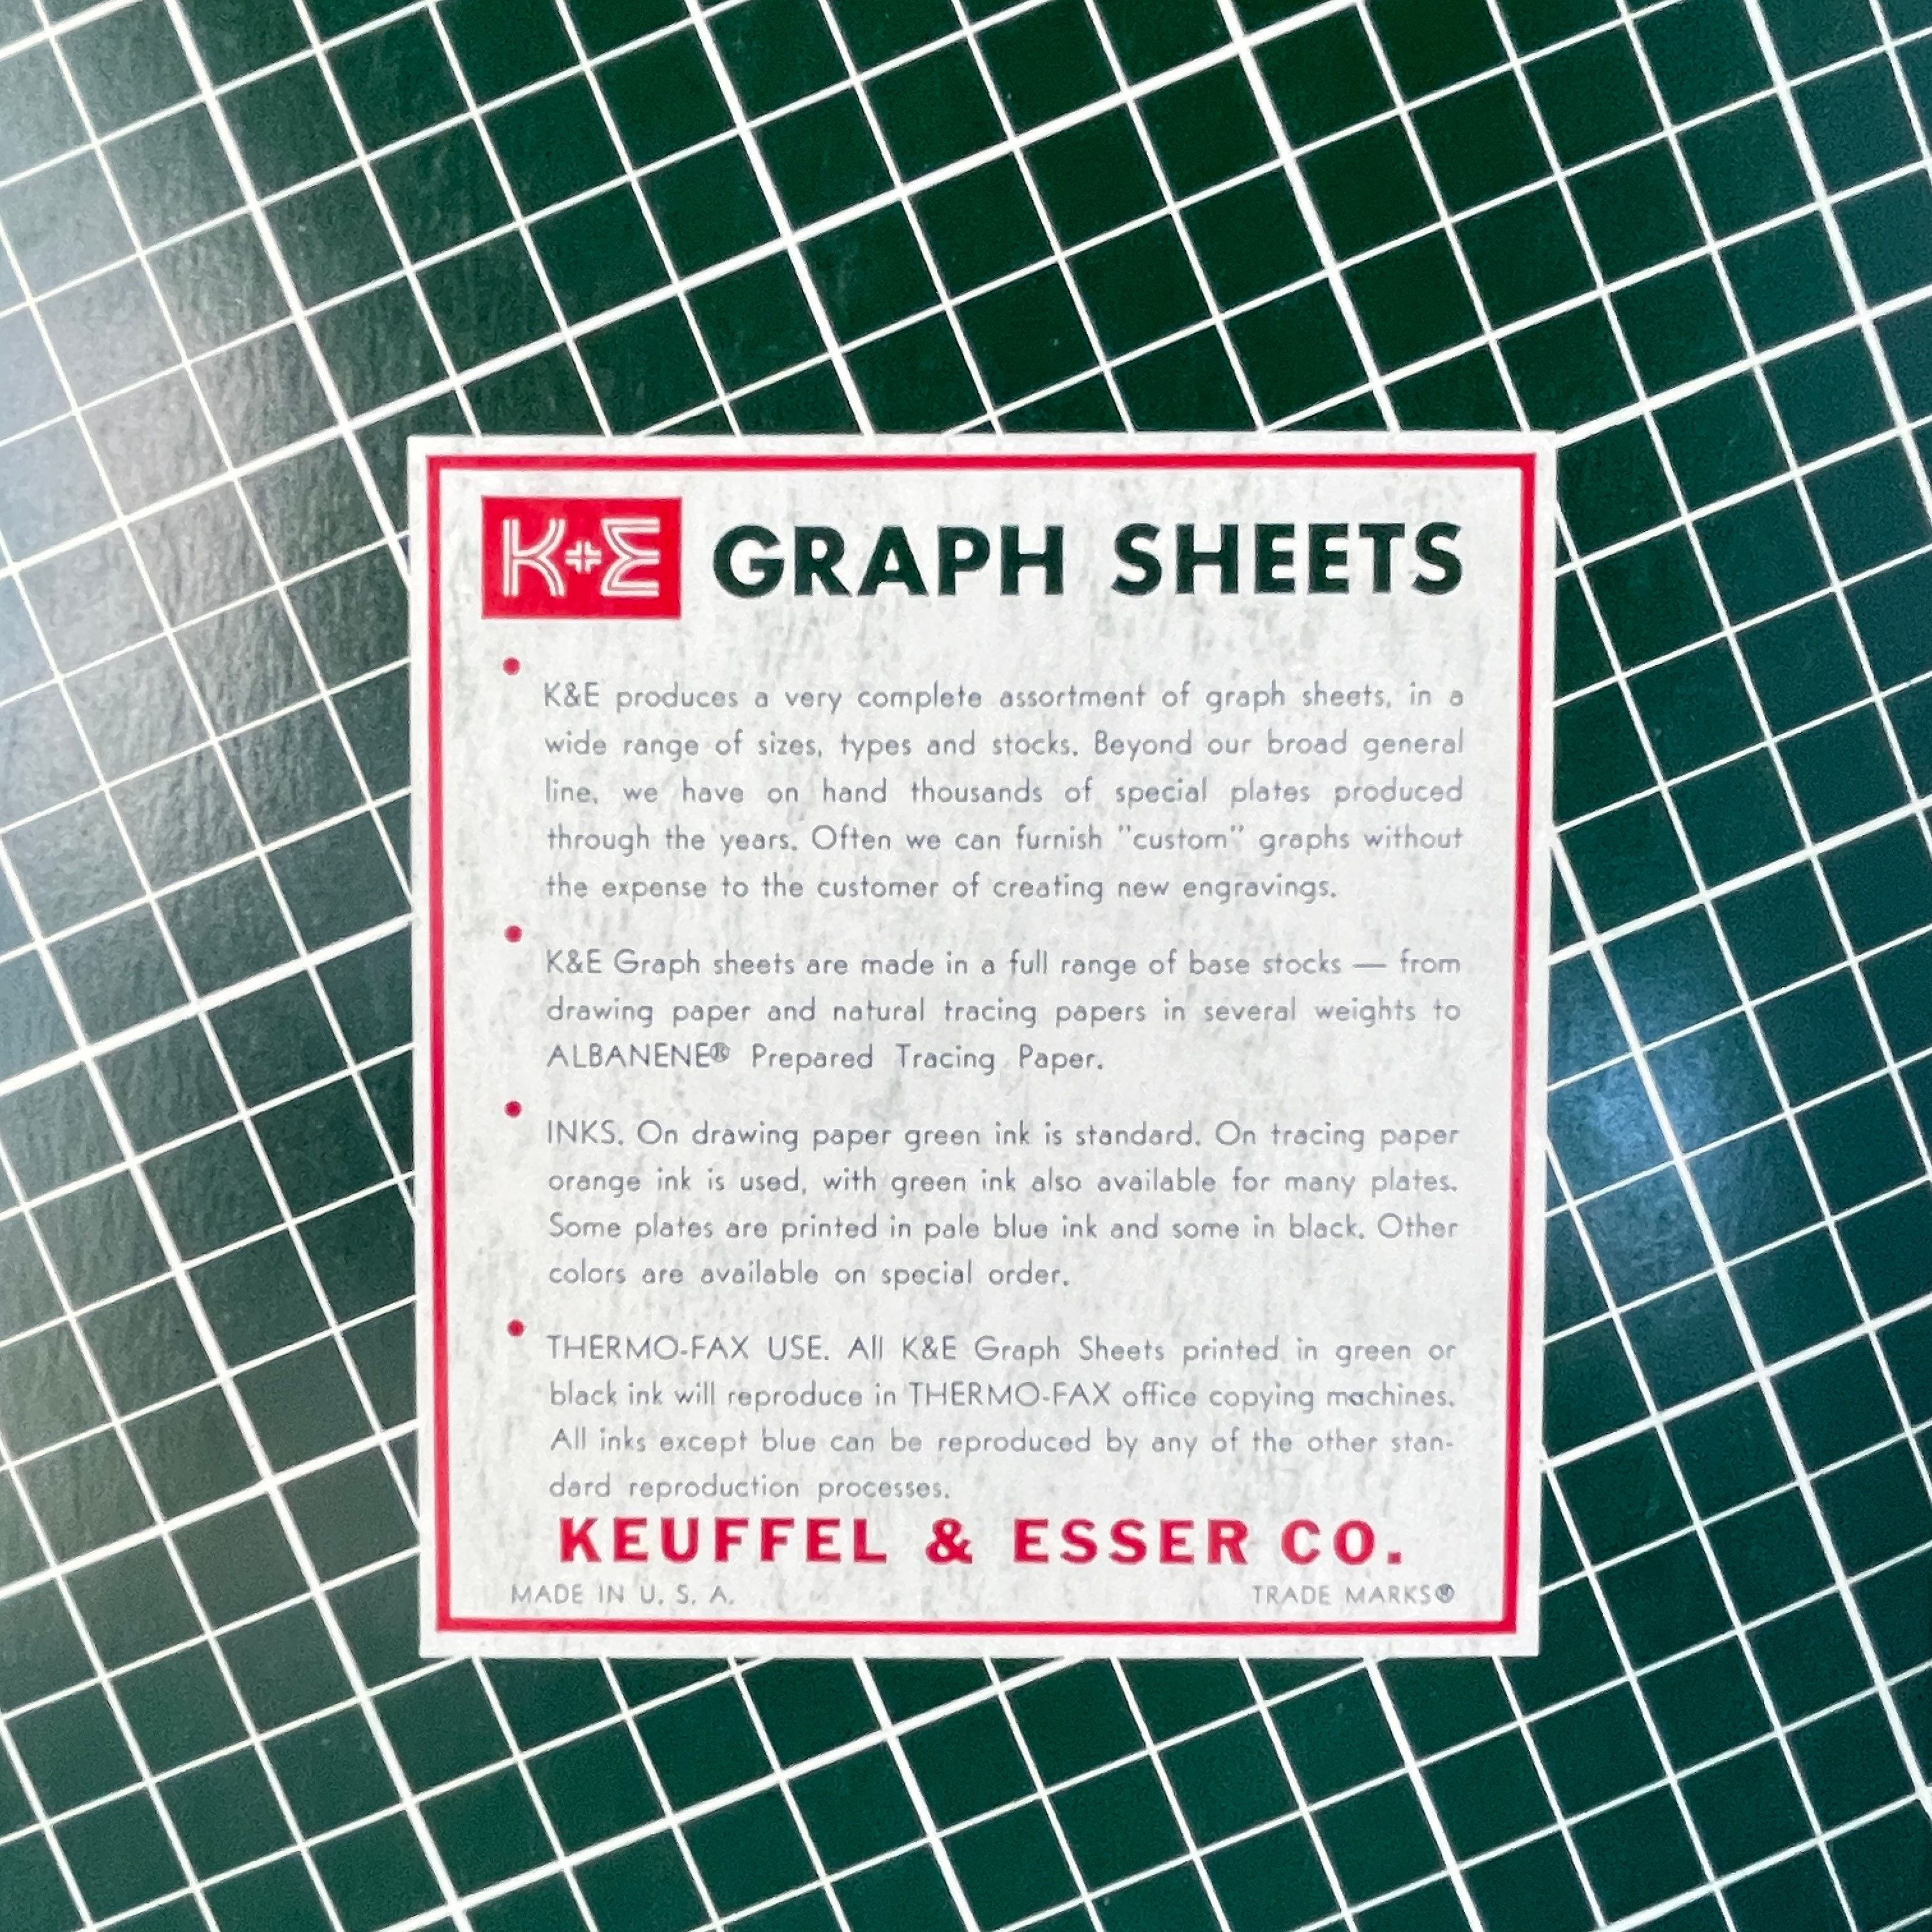 Keuffel & Esser 10x10 Half Inch Graph Paper for Science & Engineering